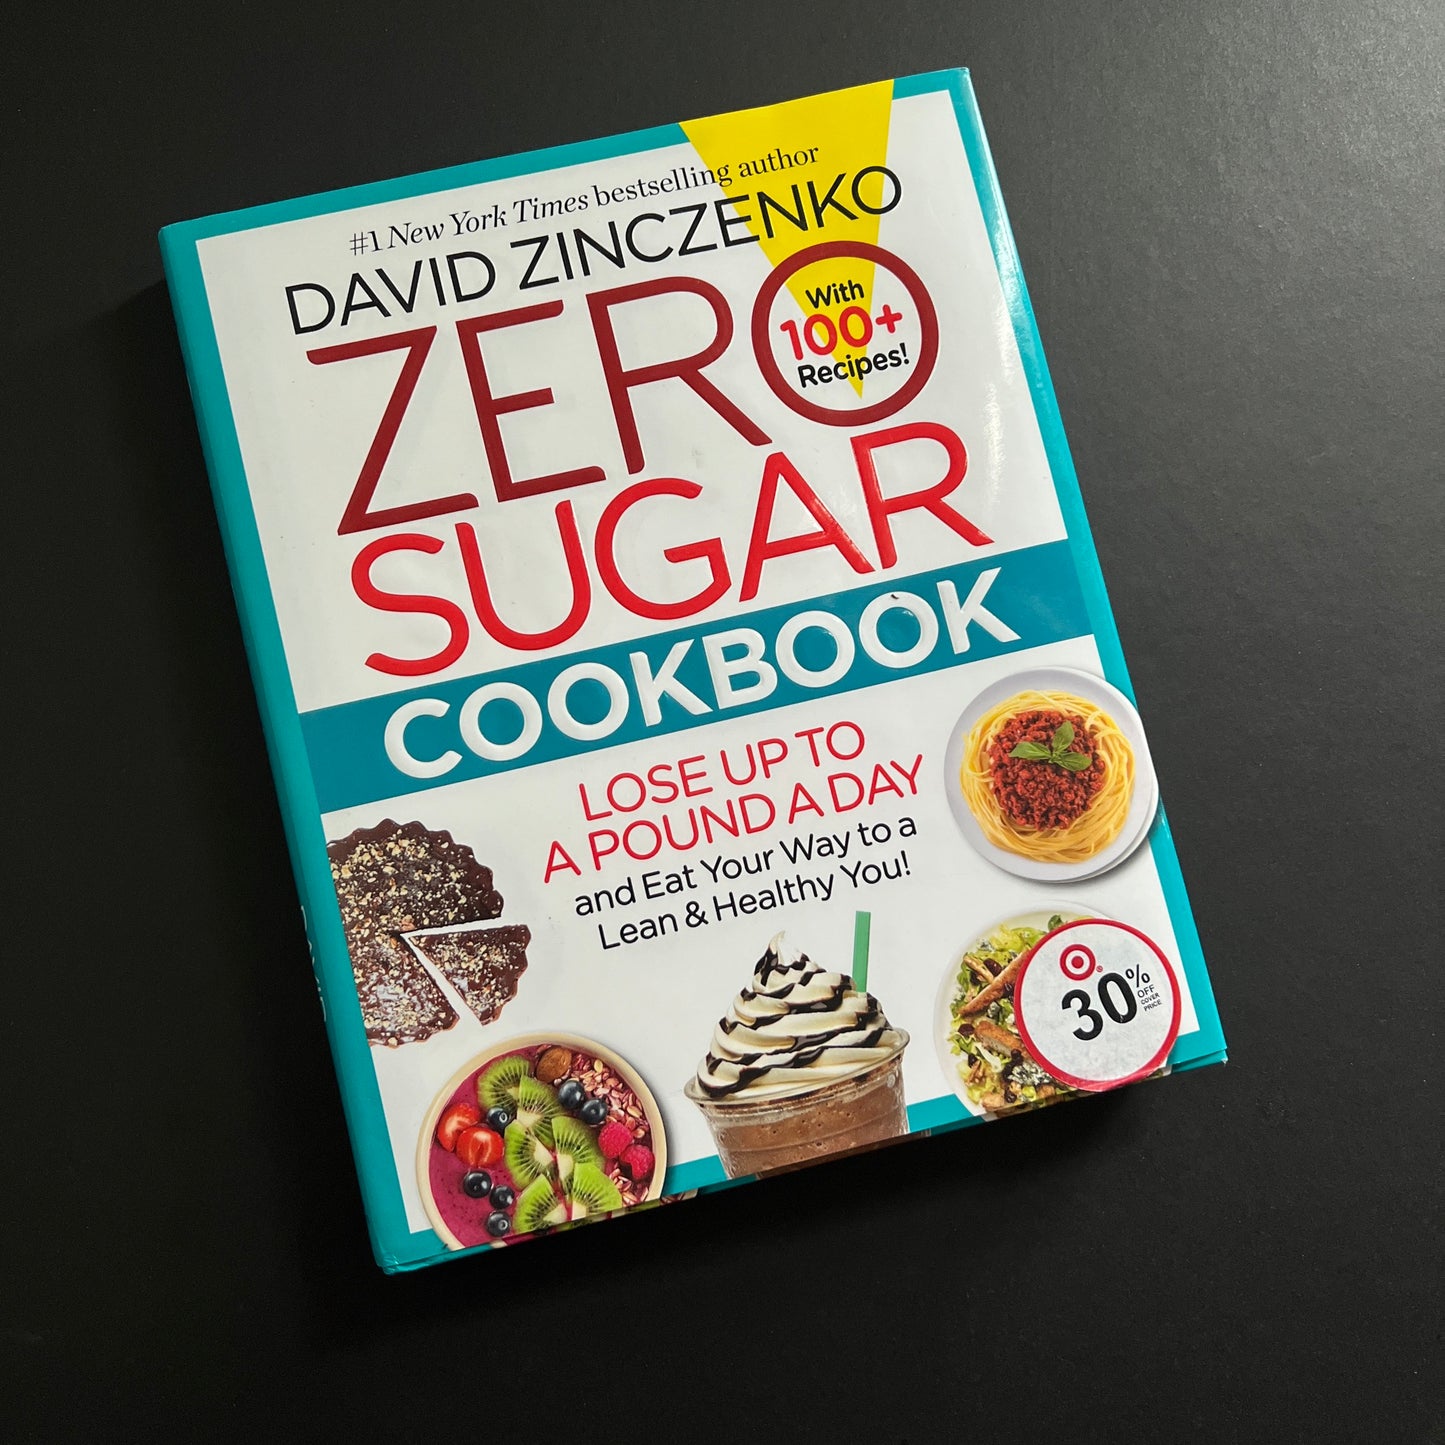 Zero Sugar Cookbook